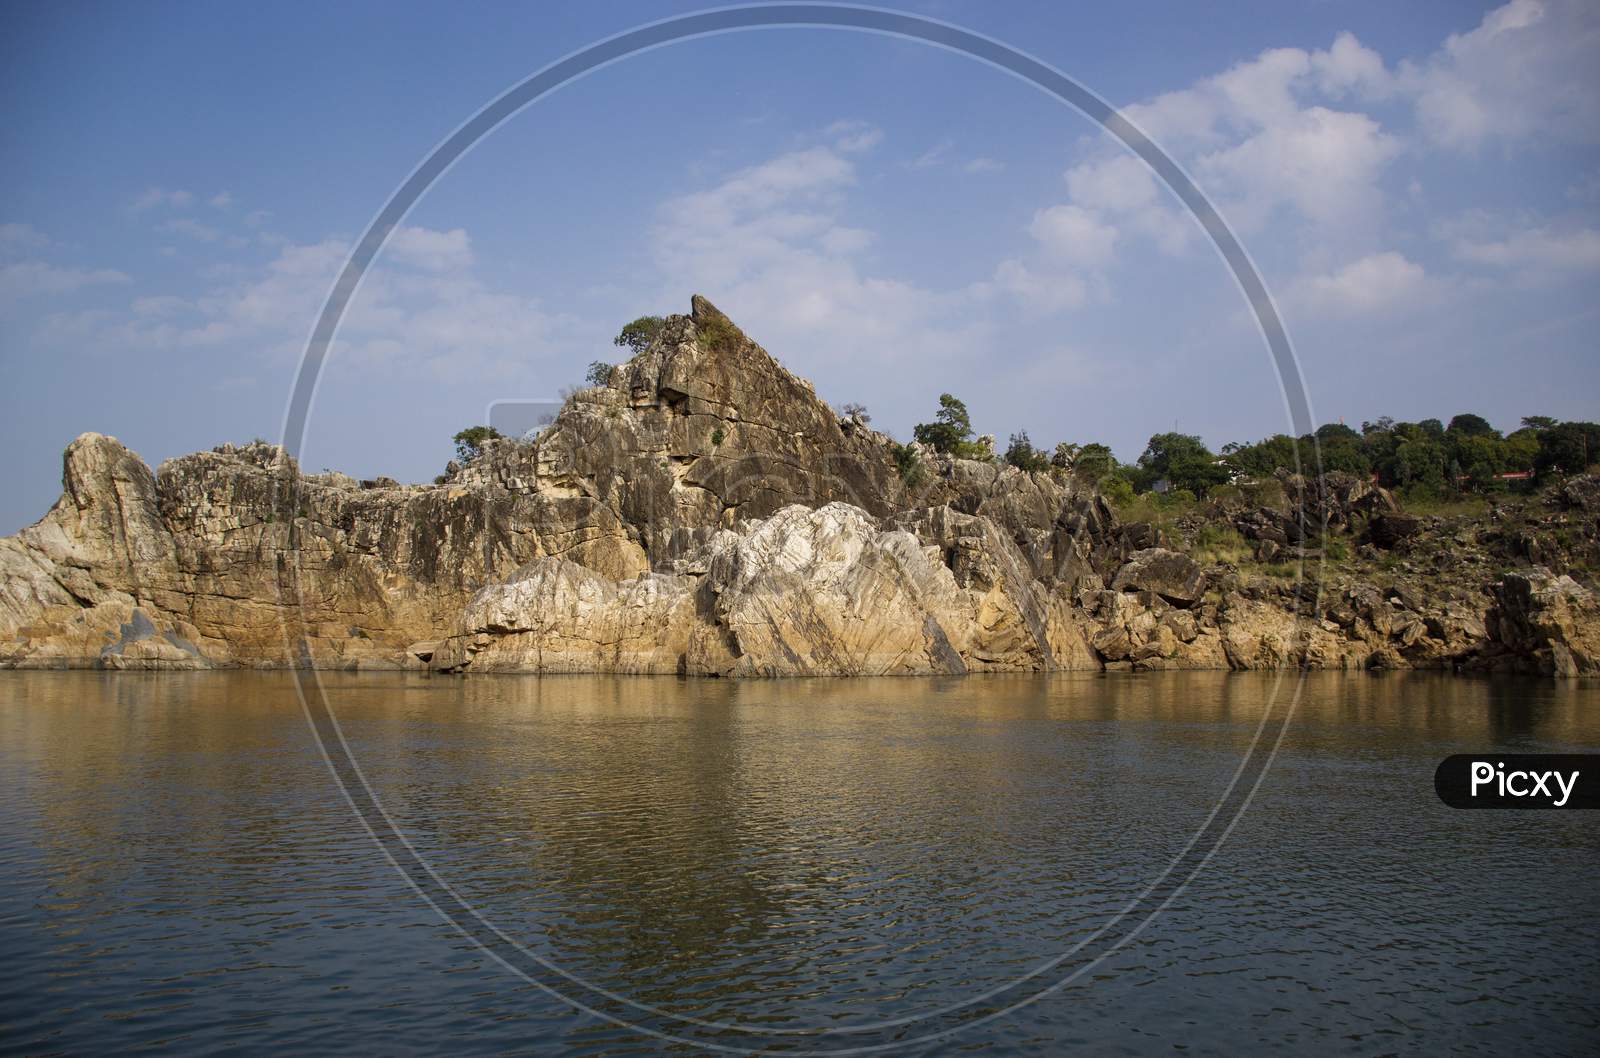 Narmada River In Between Marble Rocks, Jabalpur, Madhya Pradesh/India